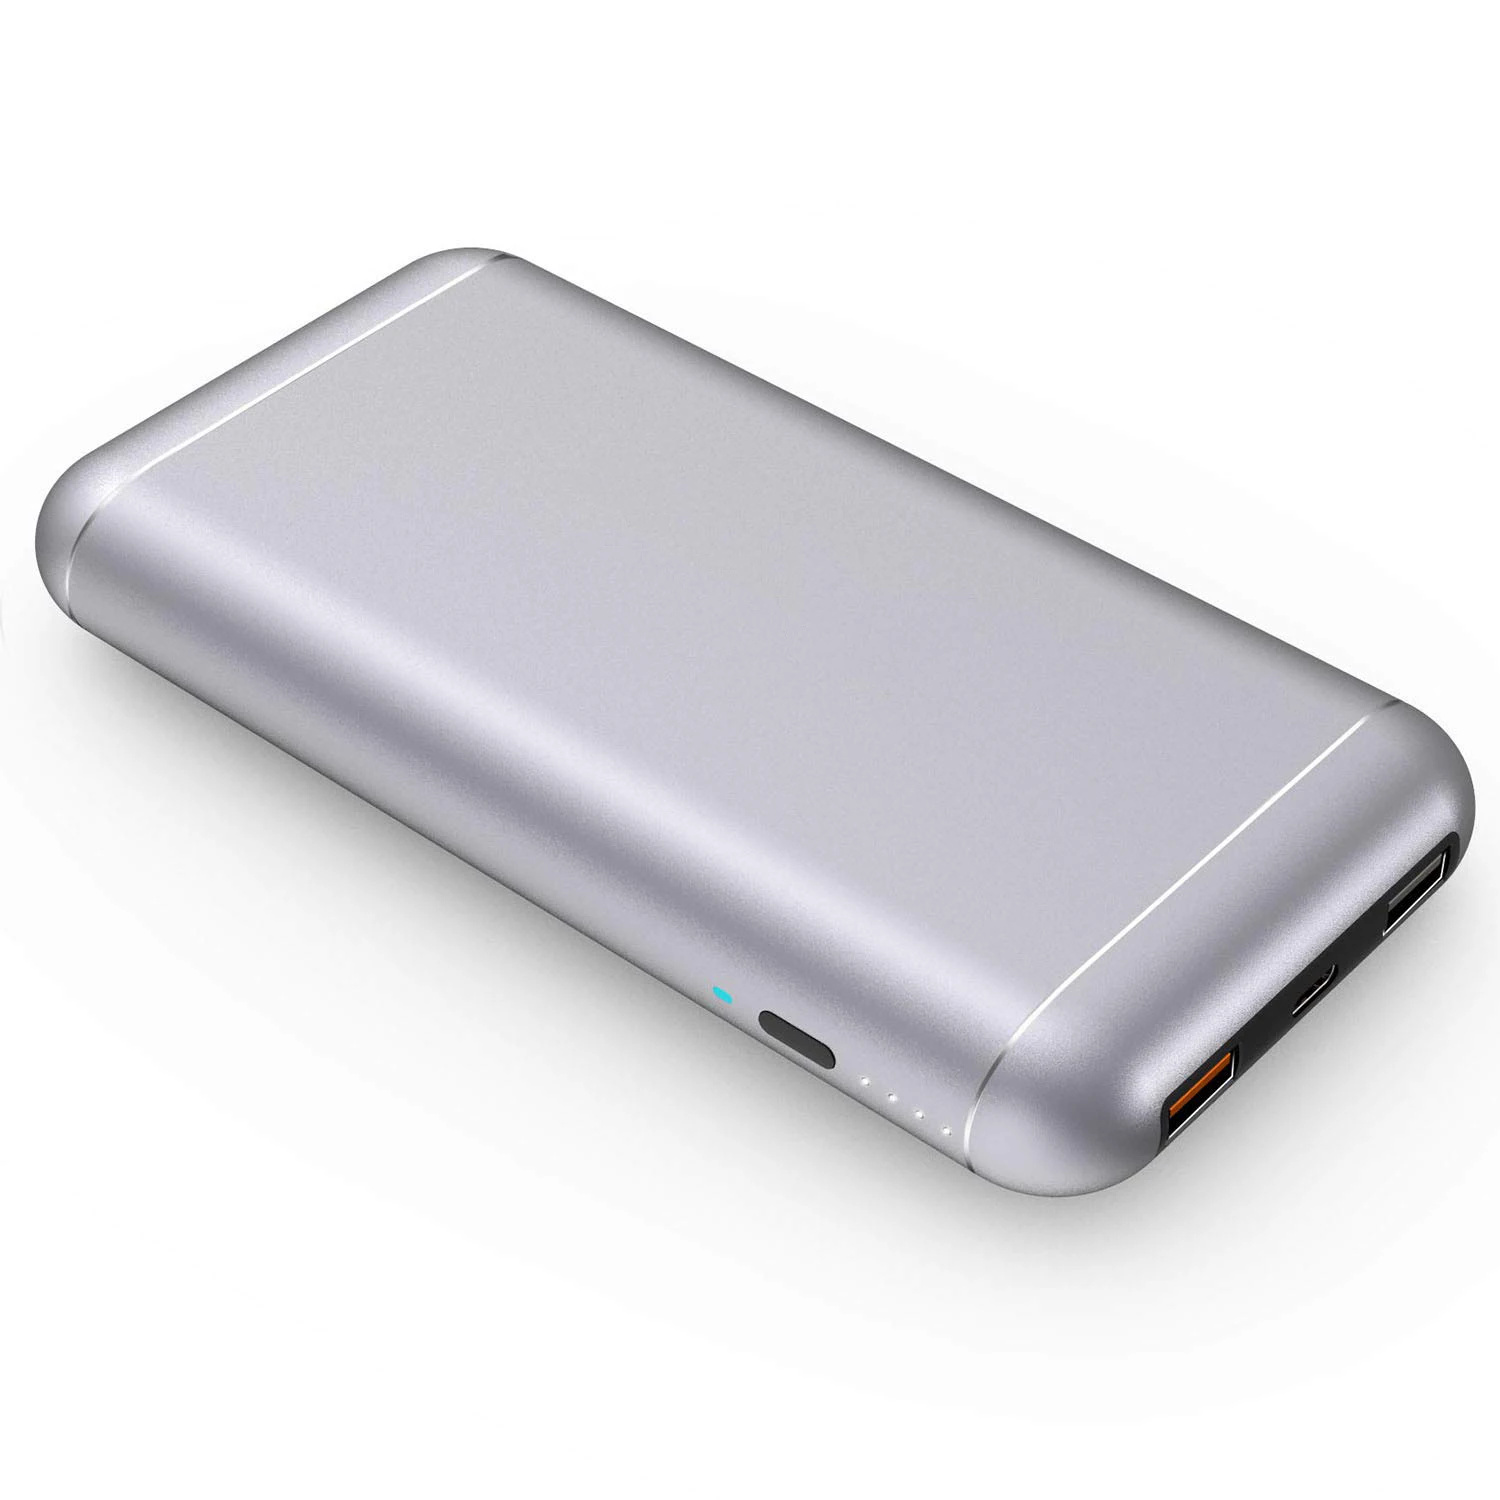 

External Battery PowerBank 20000 mah Type C PD + QC3.0 Fast Charging Mobile Powerbank Charger Power Bank